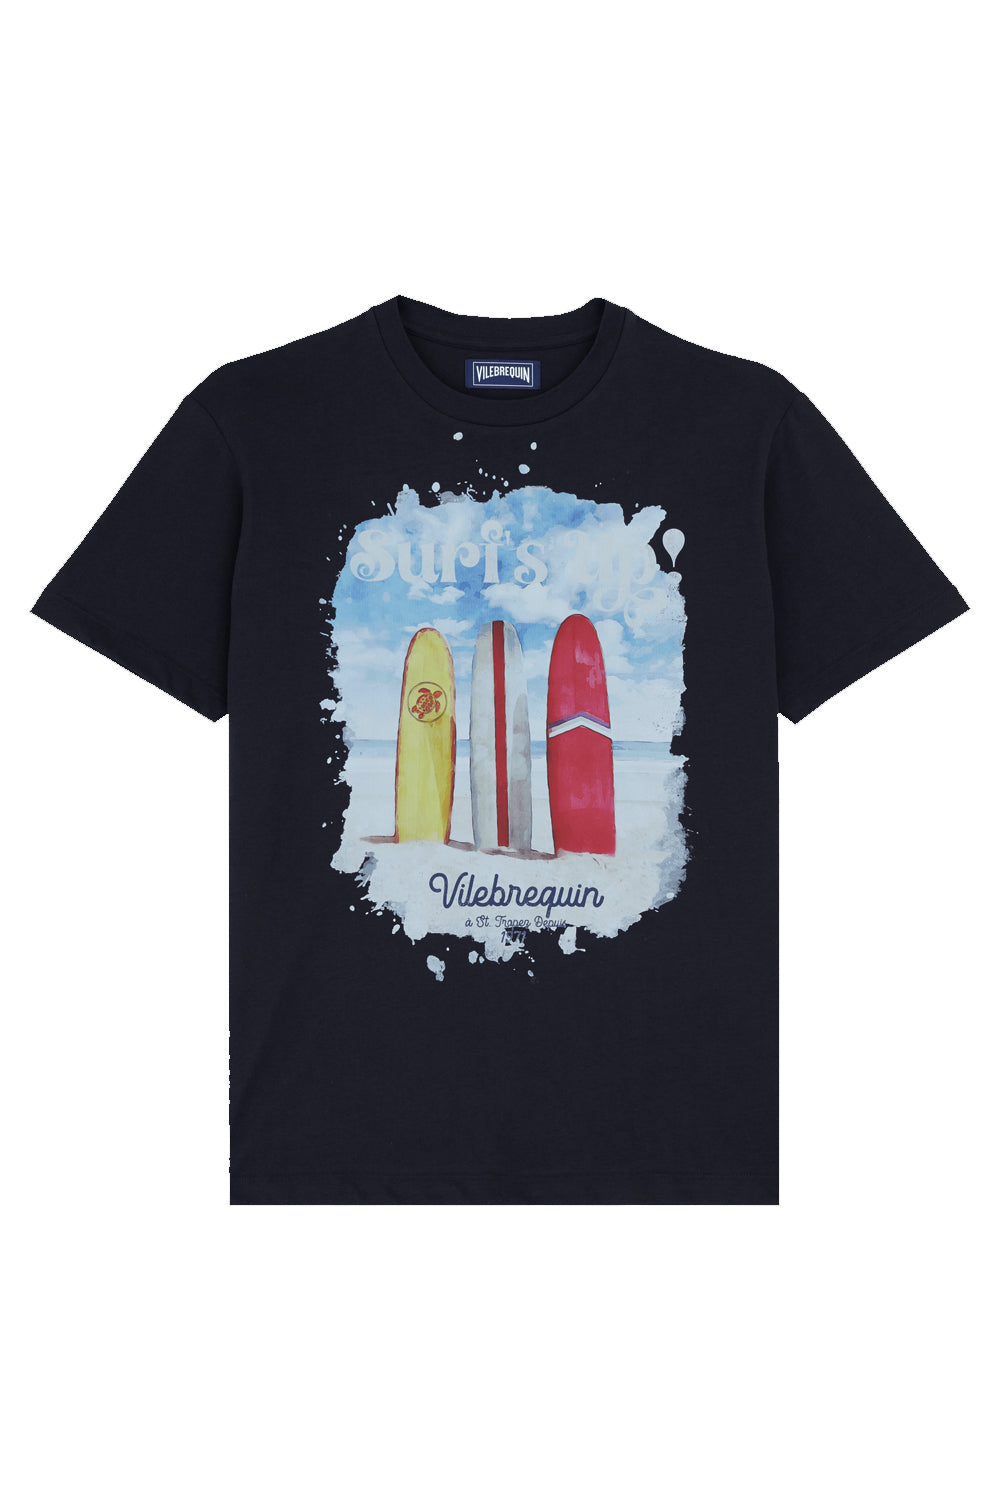 Image of VILEBREQUIN T-shirt Surf's Up